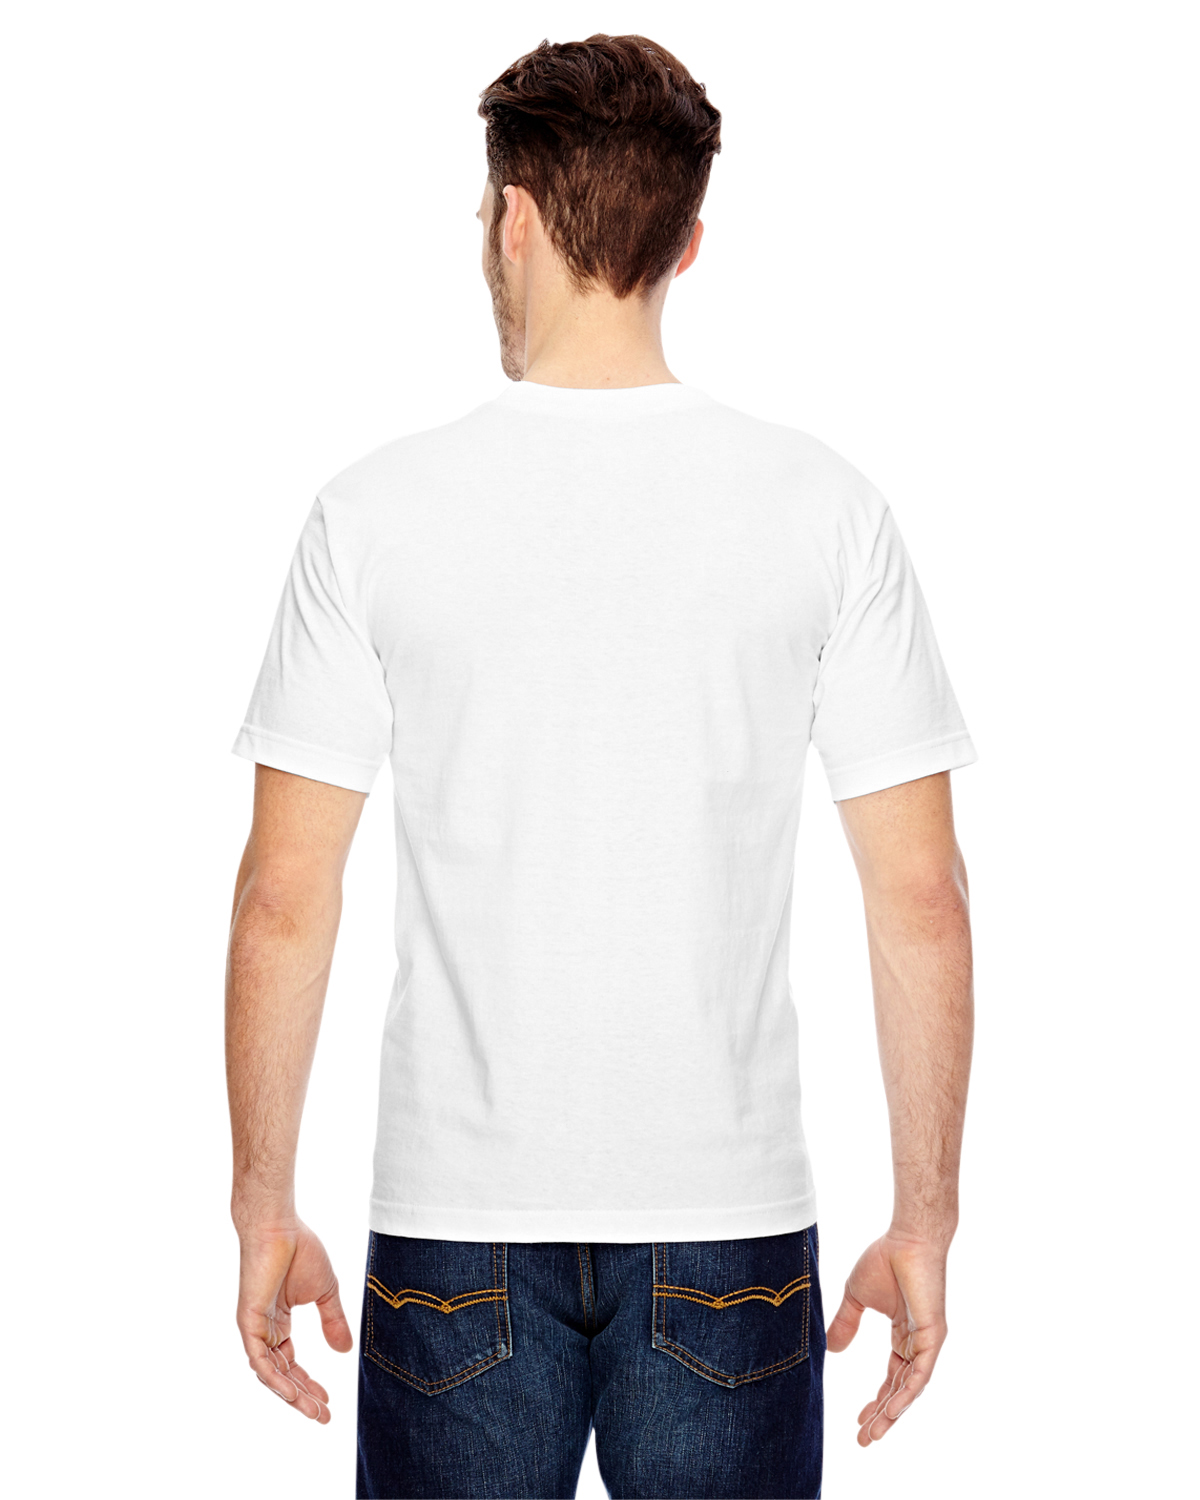 Bayside BA5100 White Adult 6.1 oz., 100% Cotton T-Shirt | JiffyShirts